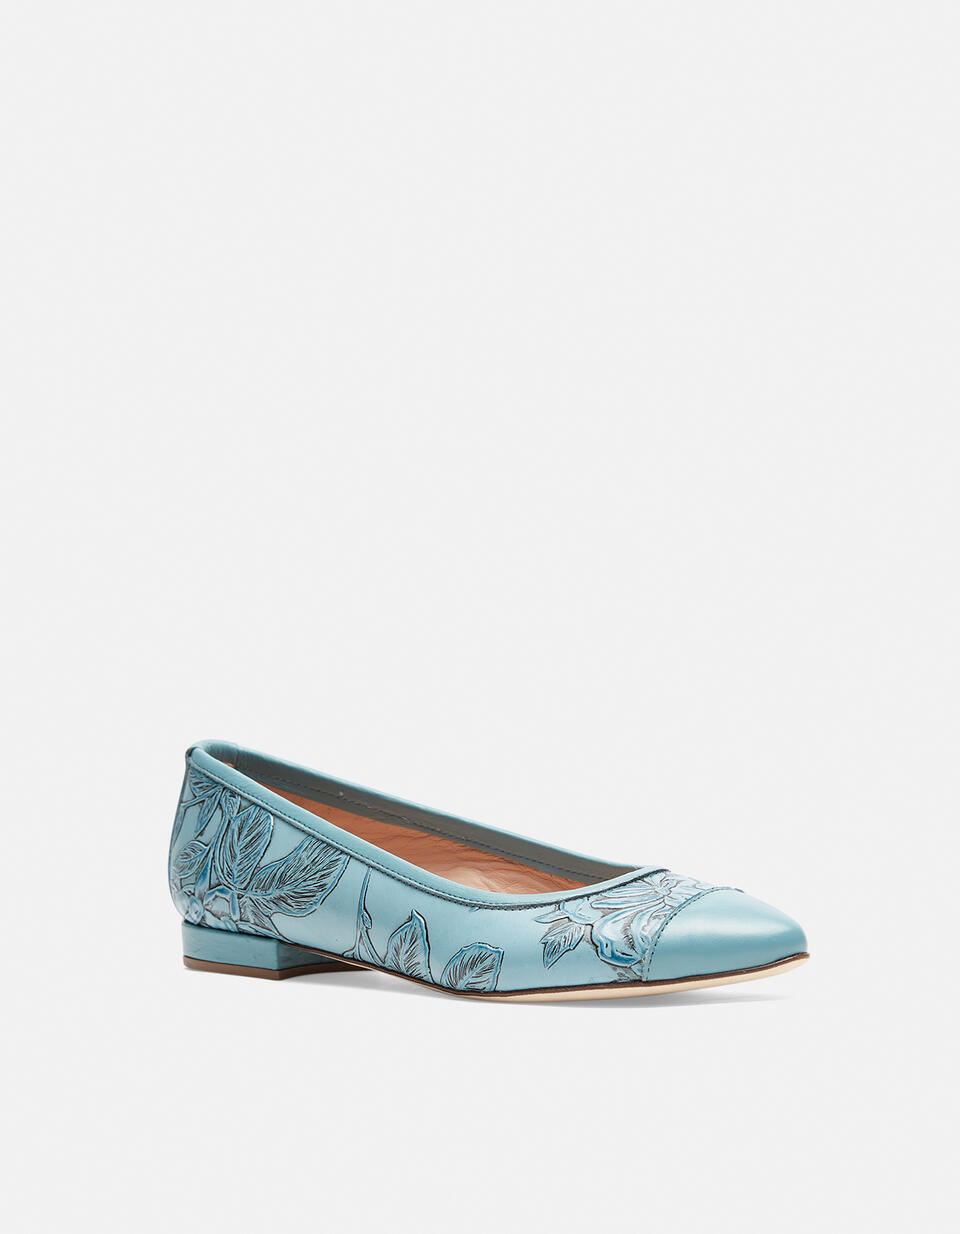 Mimi flat CELESTE  - Women Shoes - Shoes - Cuoieria Fiorentina